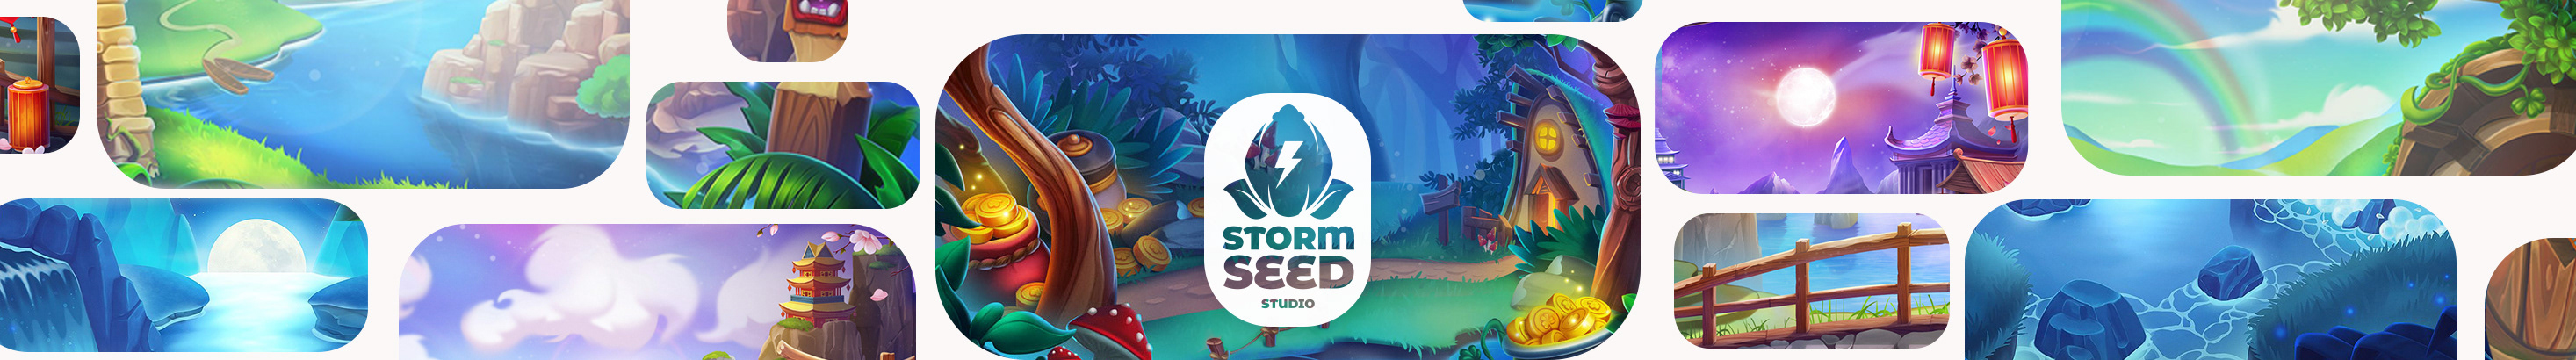 StormSeed studio's profile banner